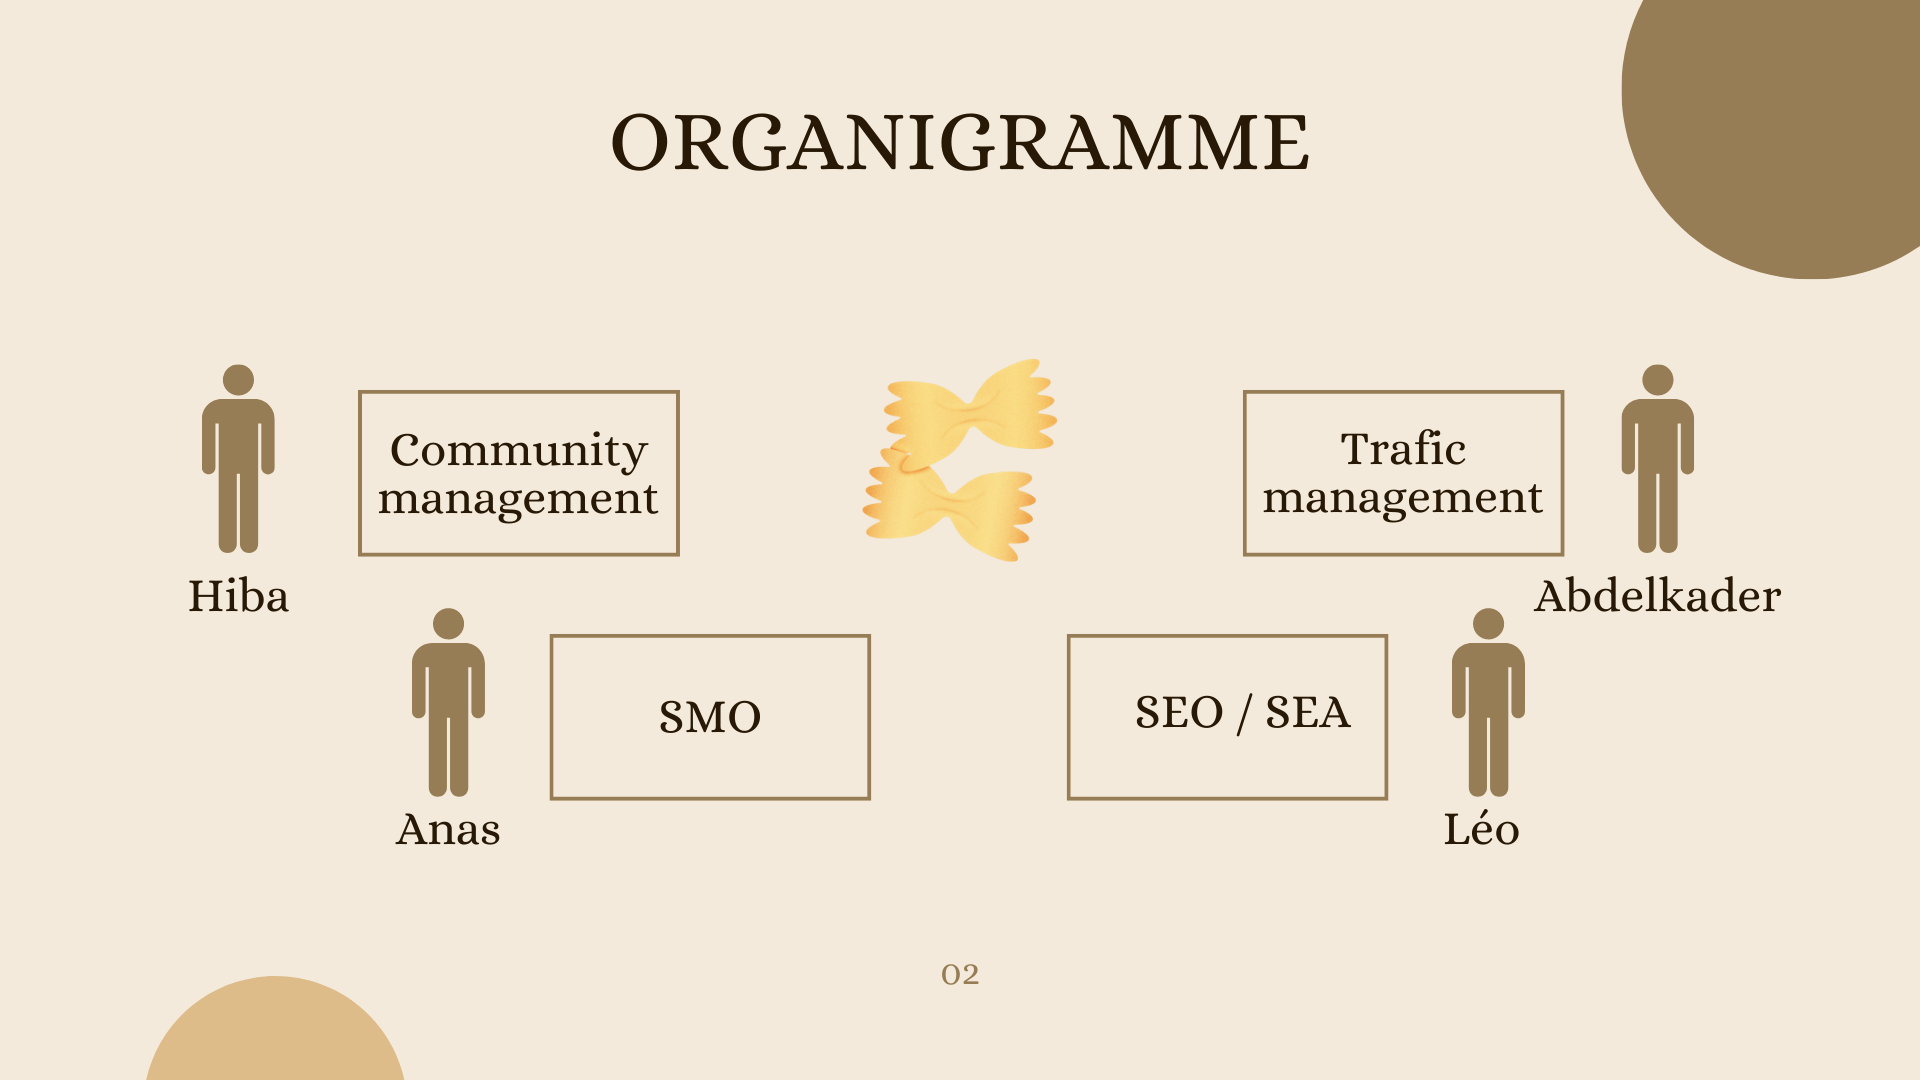 ORGANIGRAMME

©
Community
management
Hiba e
mT

Anas

02

 

@
Trafic
management

° Abdelkader

SEO / SEA "

Léo